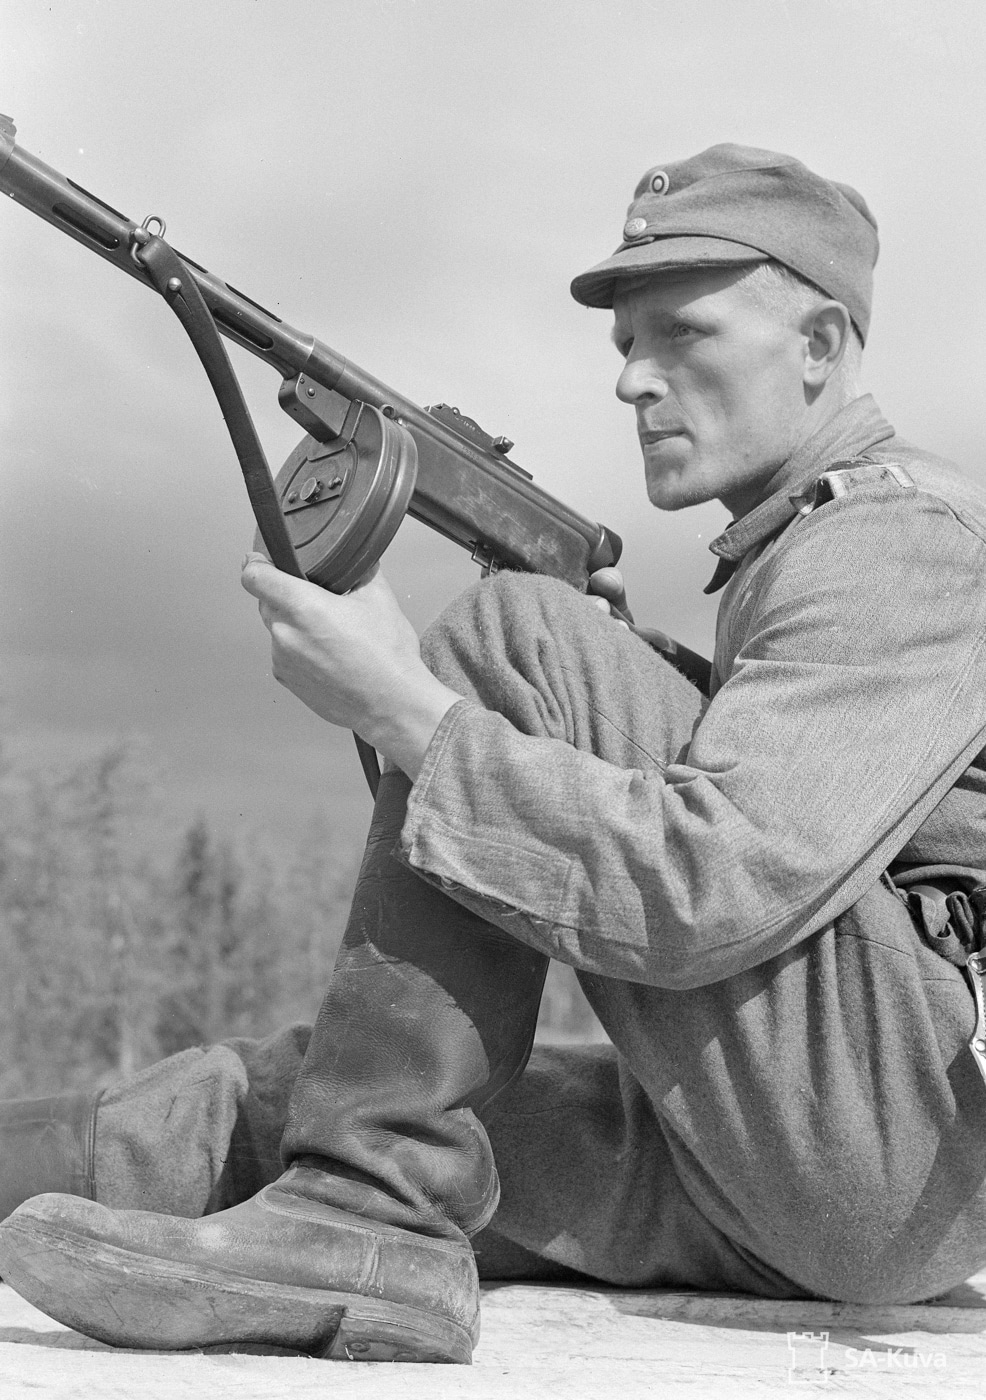 finnish sniper on train roof with submachine gun